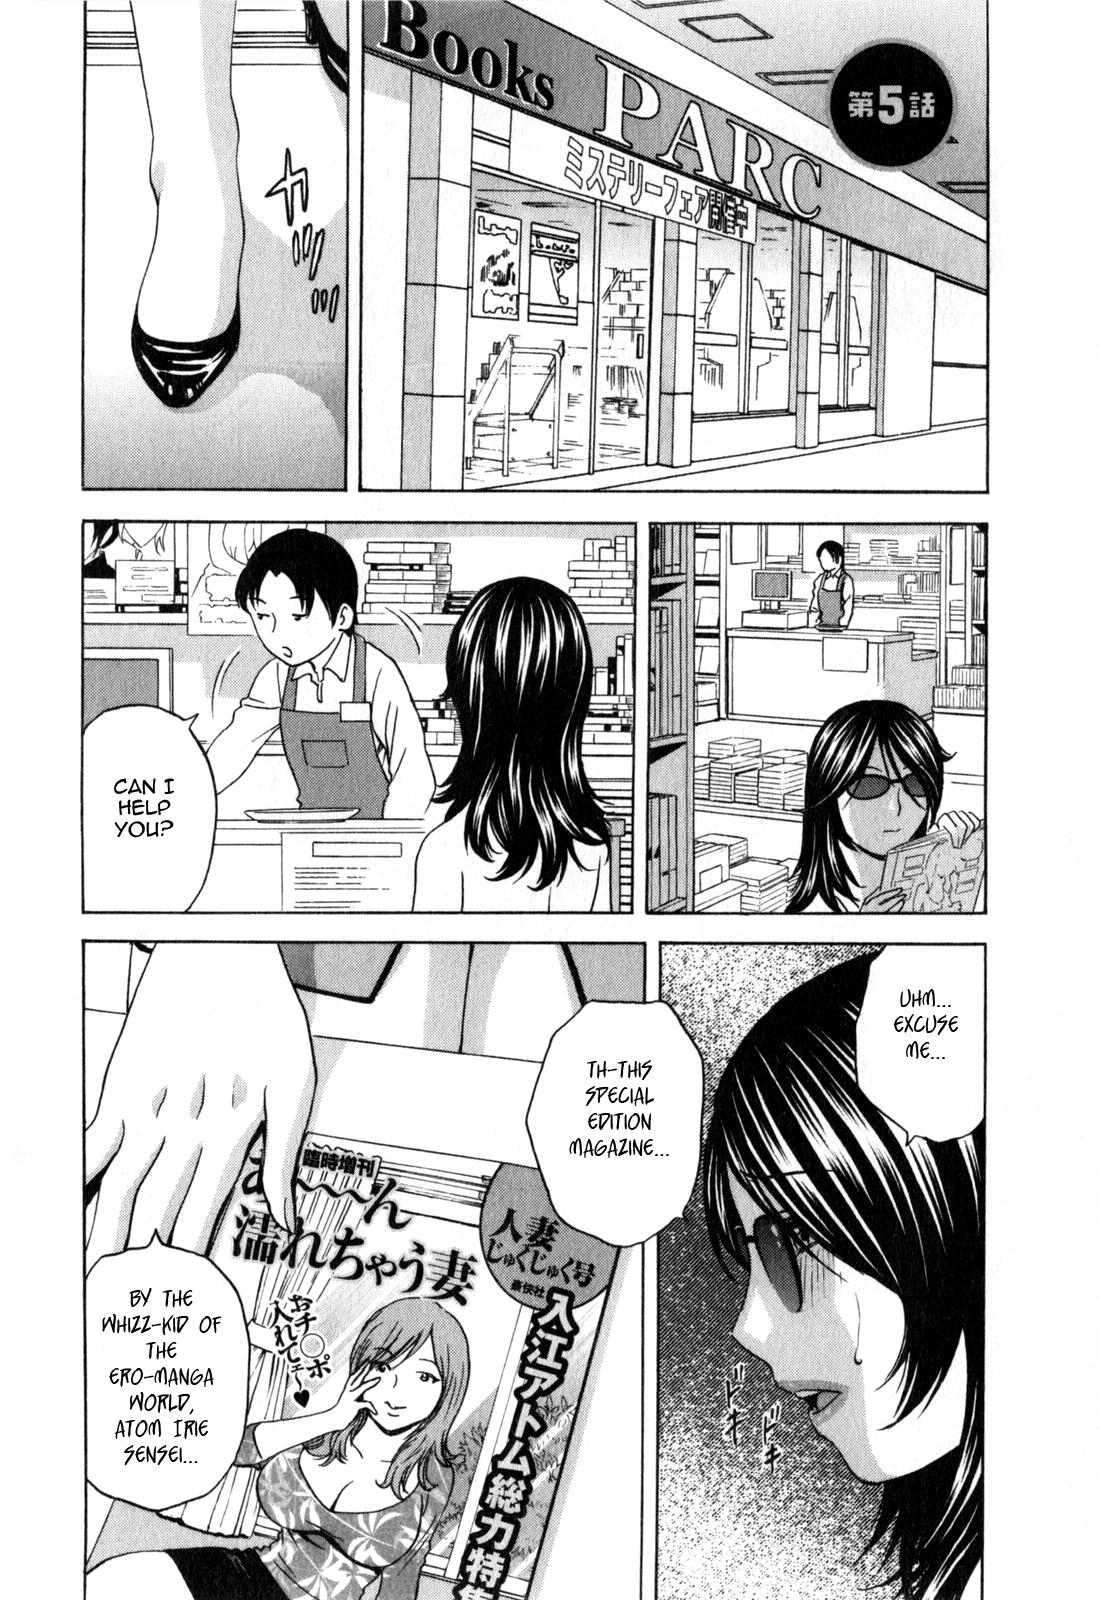 [Hidemaru] Life with Married Women Just Like a Manga 3 - Ch. 1-7 [English] {Tadanohito} 86